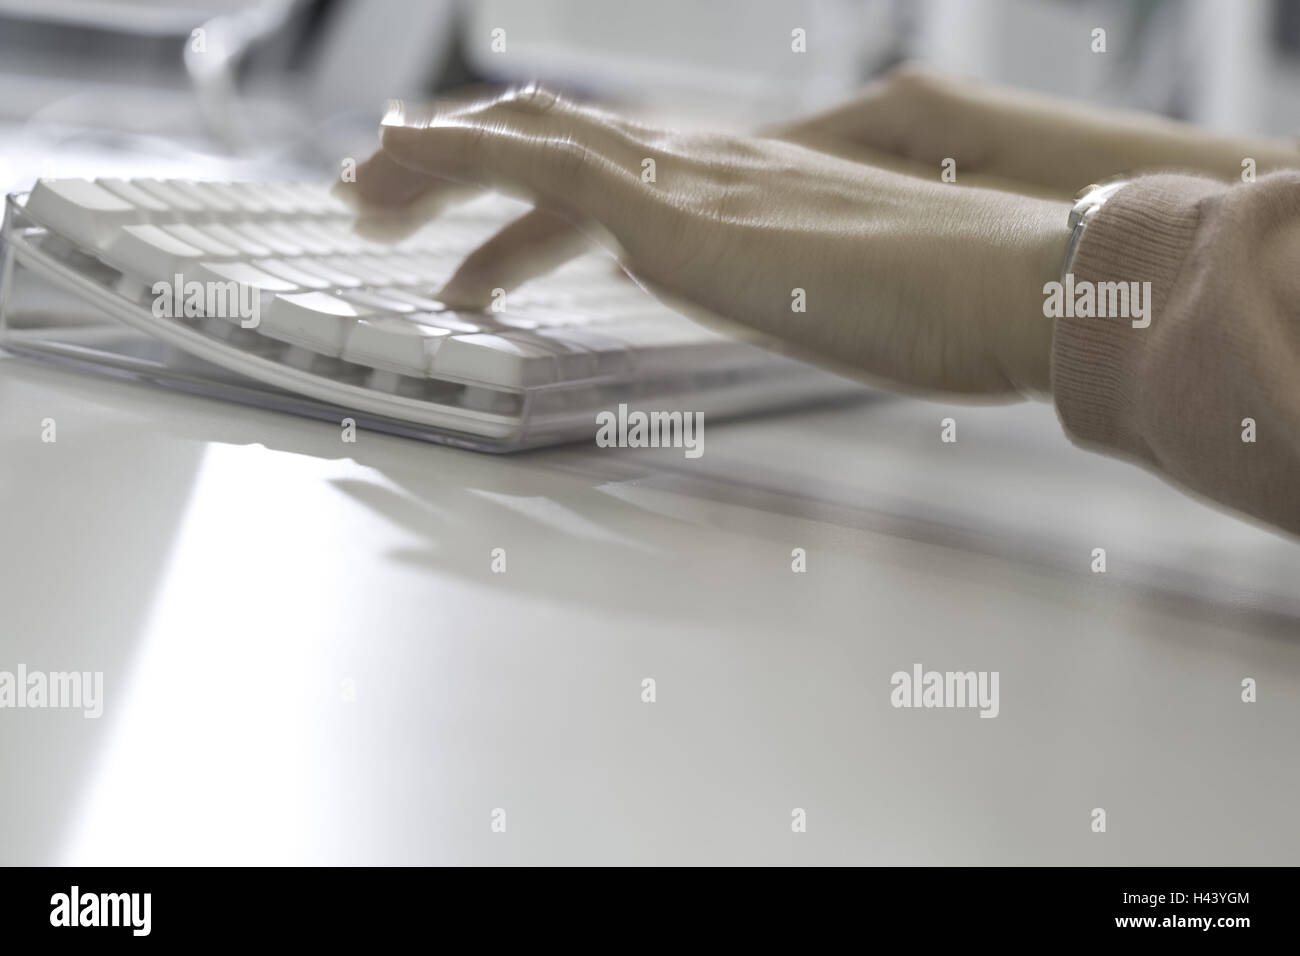 Women's hands, keyboard, data entry, detail, Stock Photo